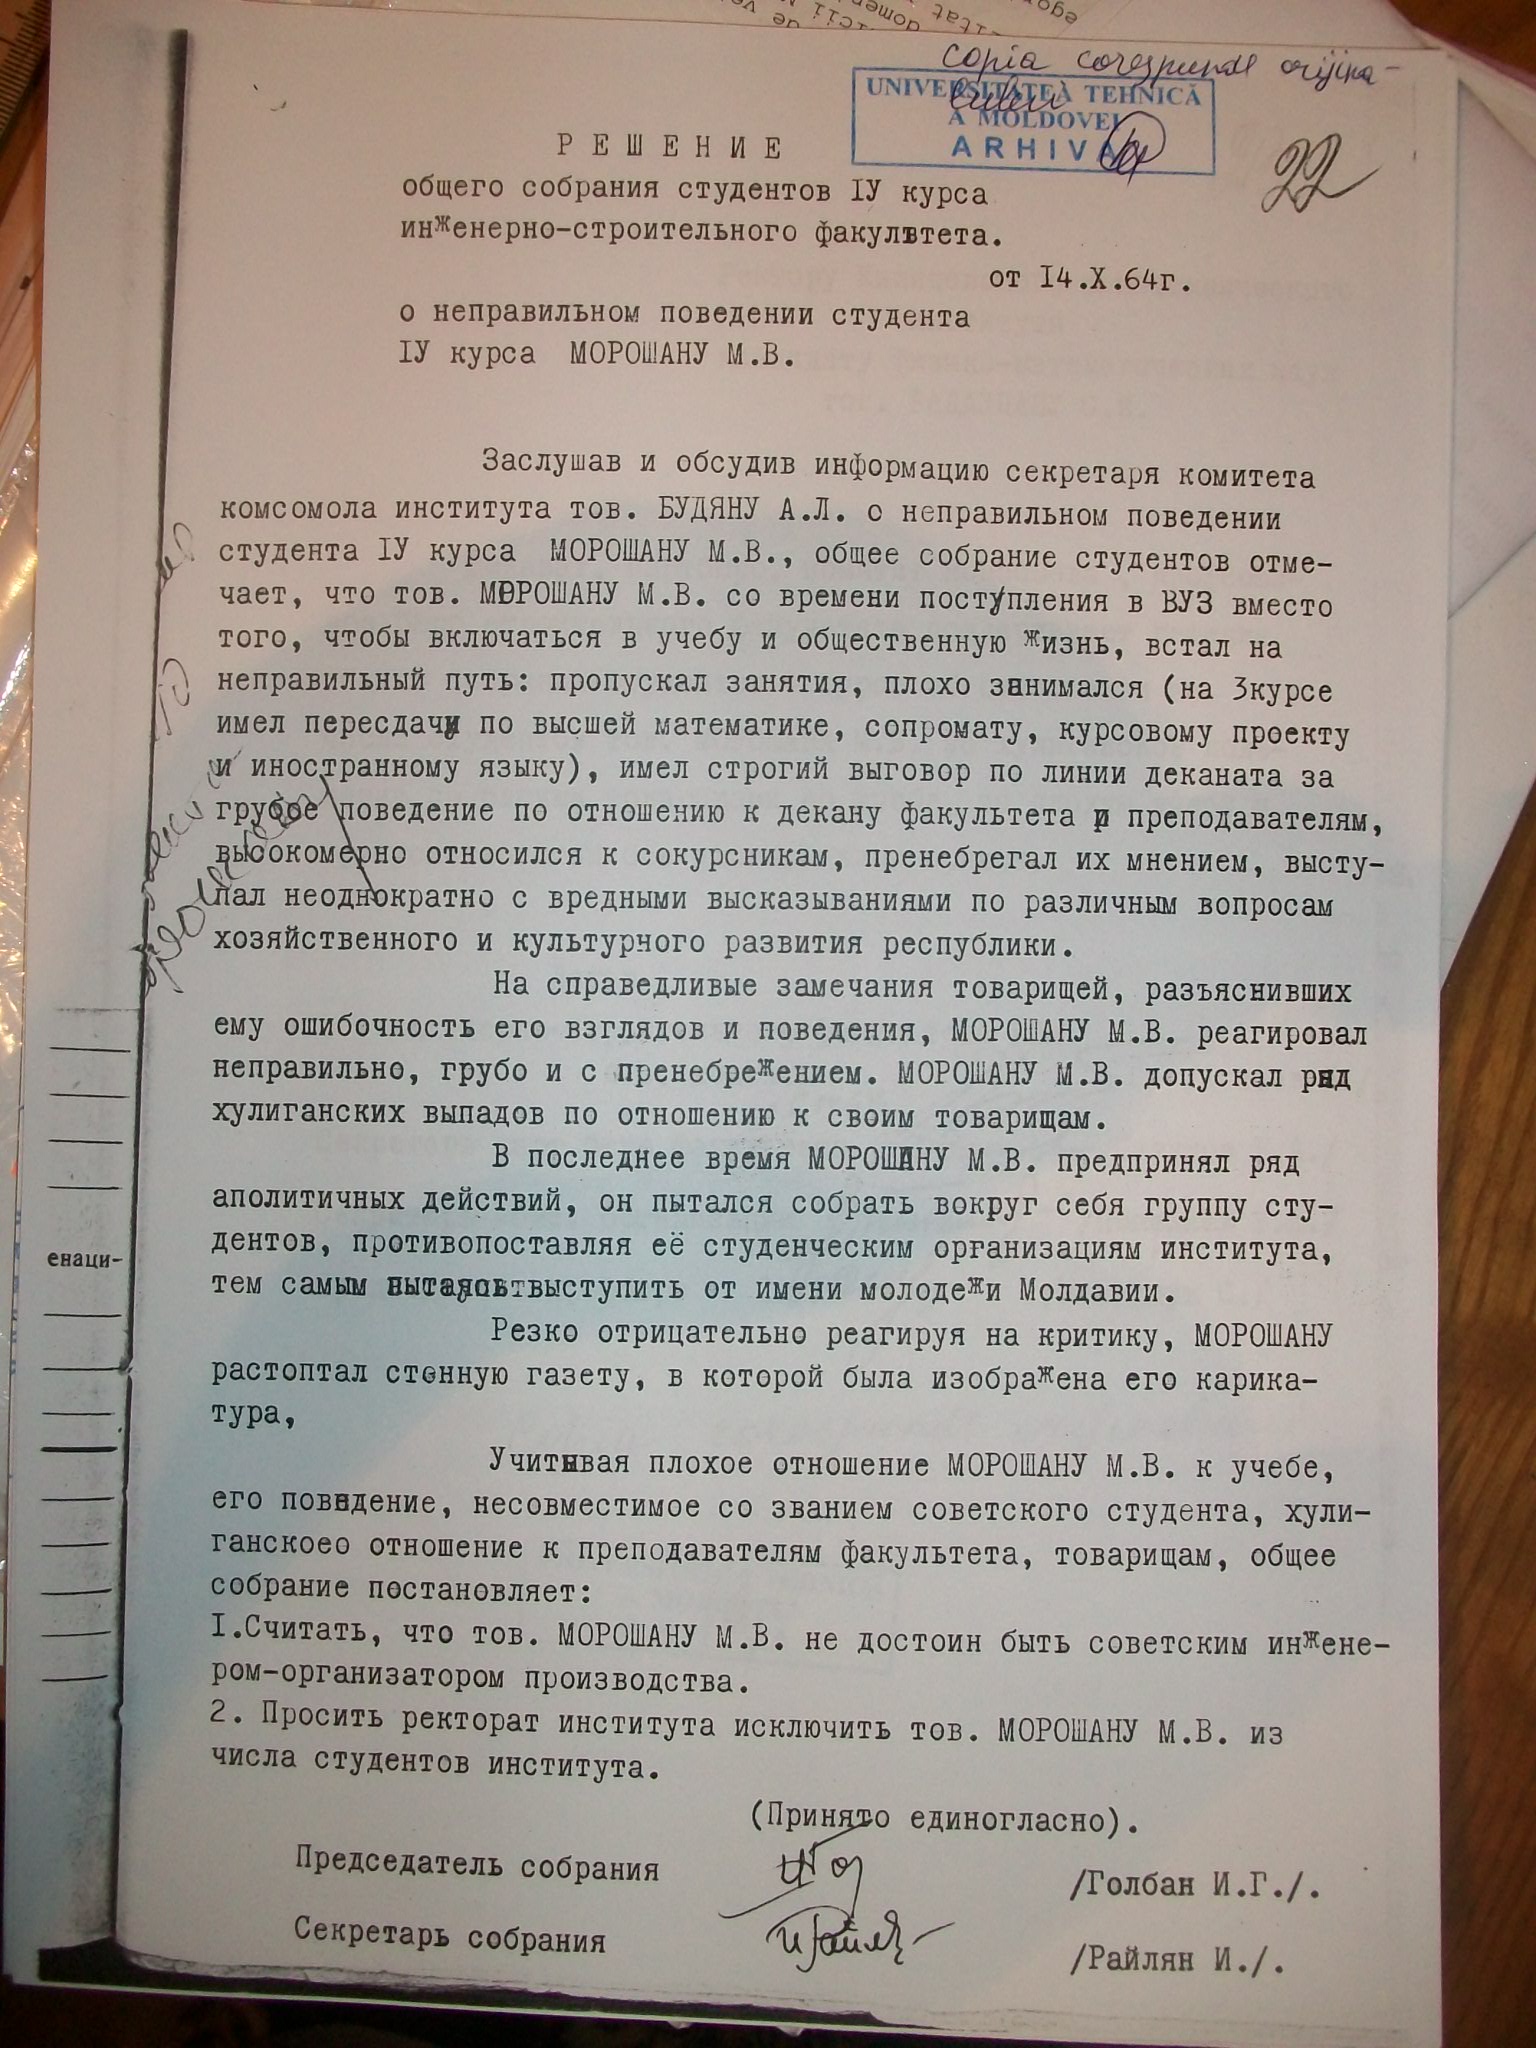 Decision of the Departmental Student Meeting concerning Mihai Moroșanu's 'Incorrect Behaviour', 14 October 1964